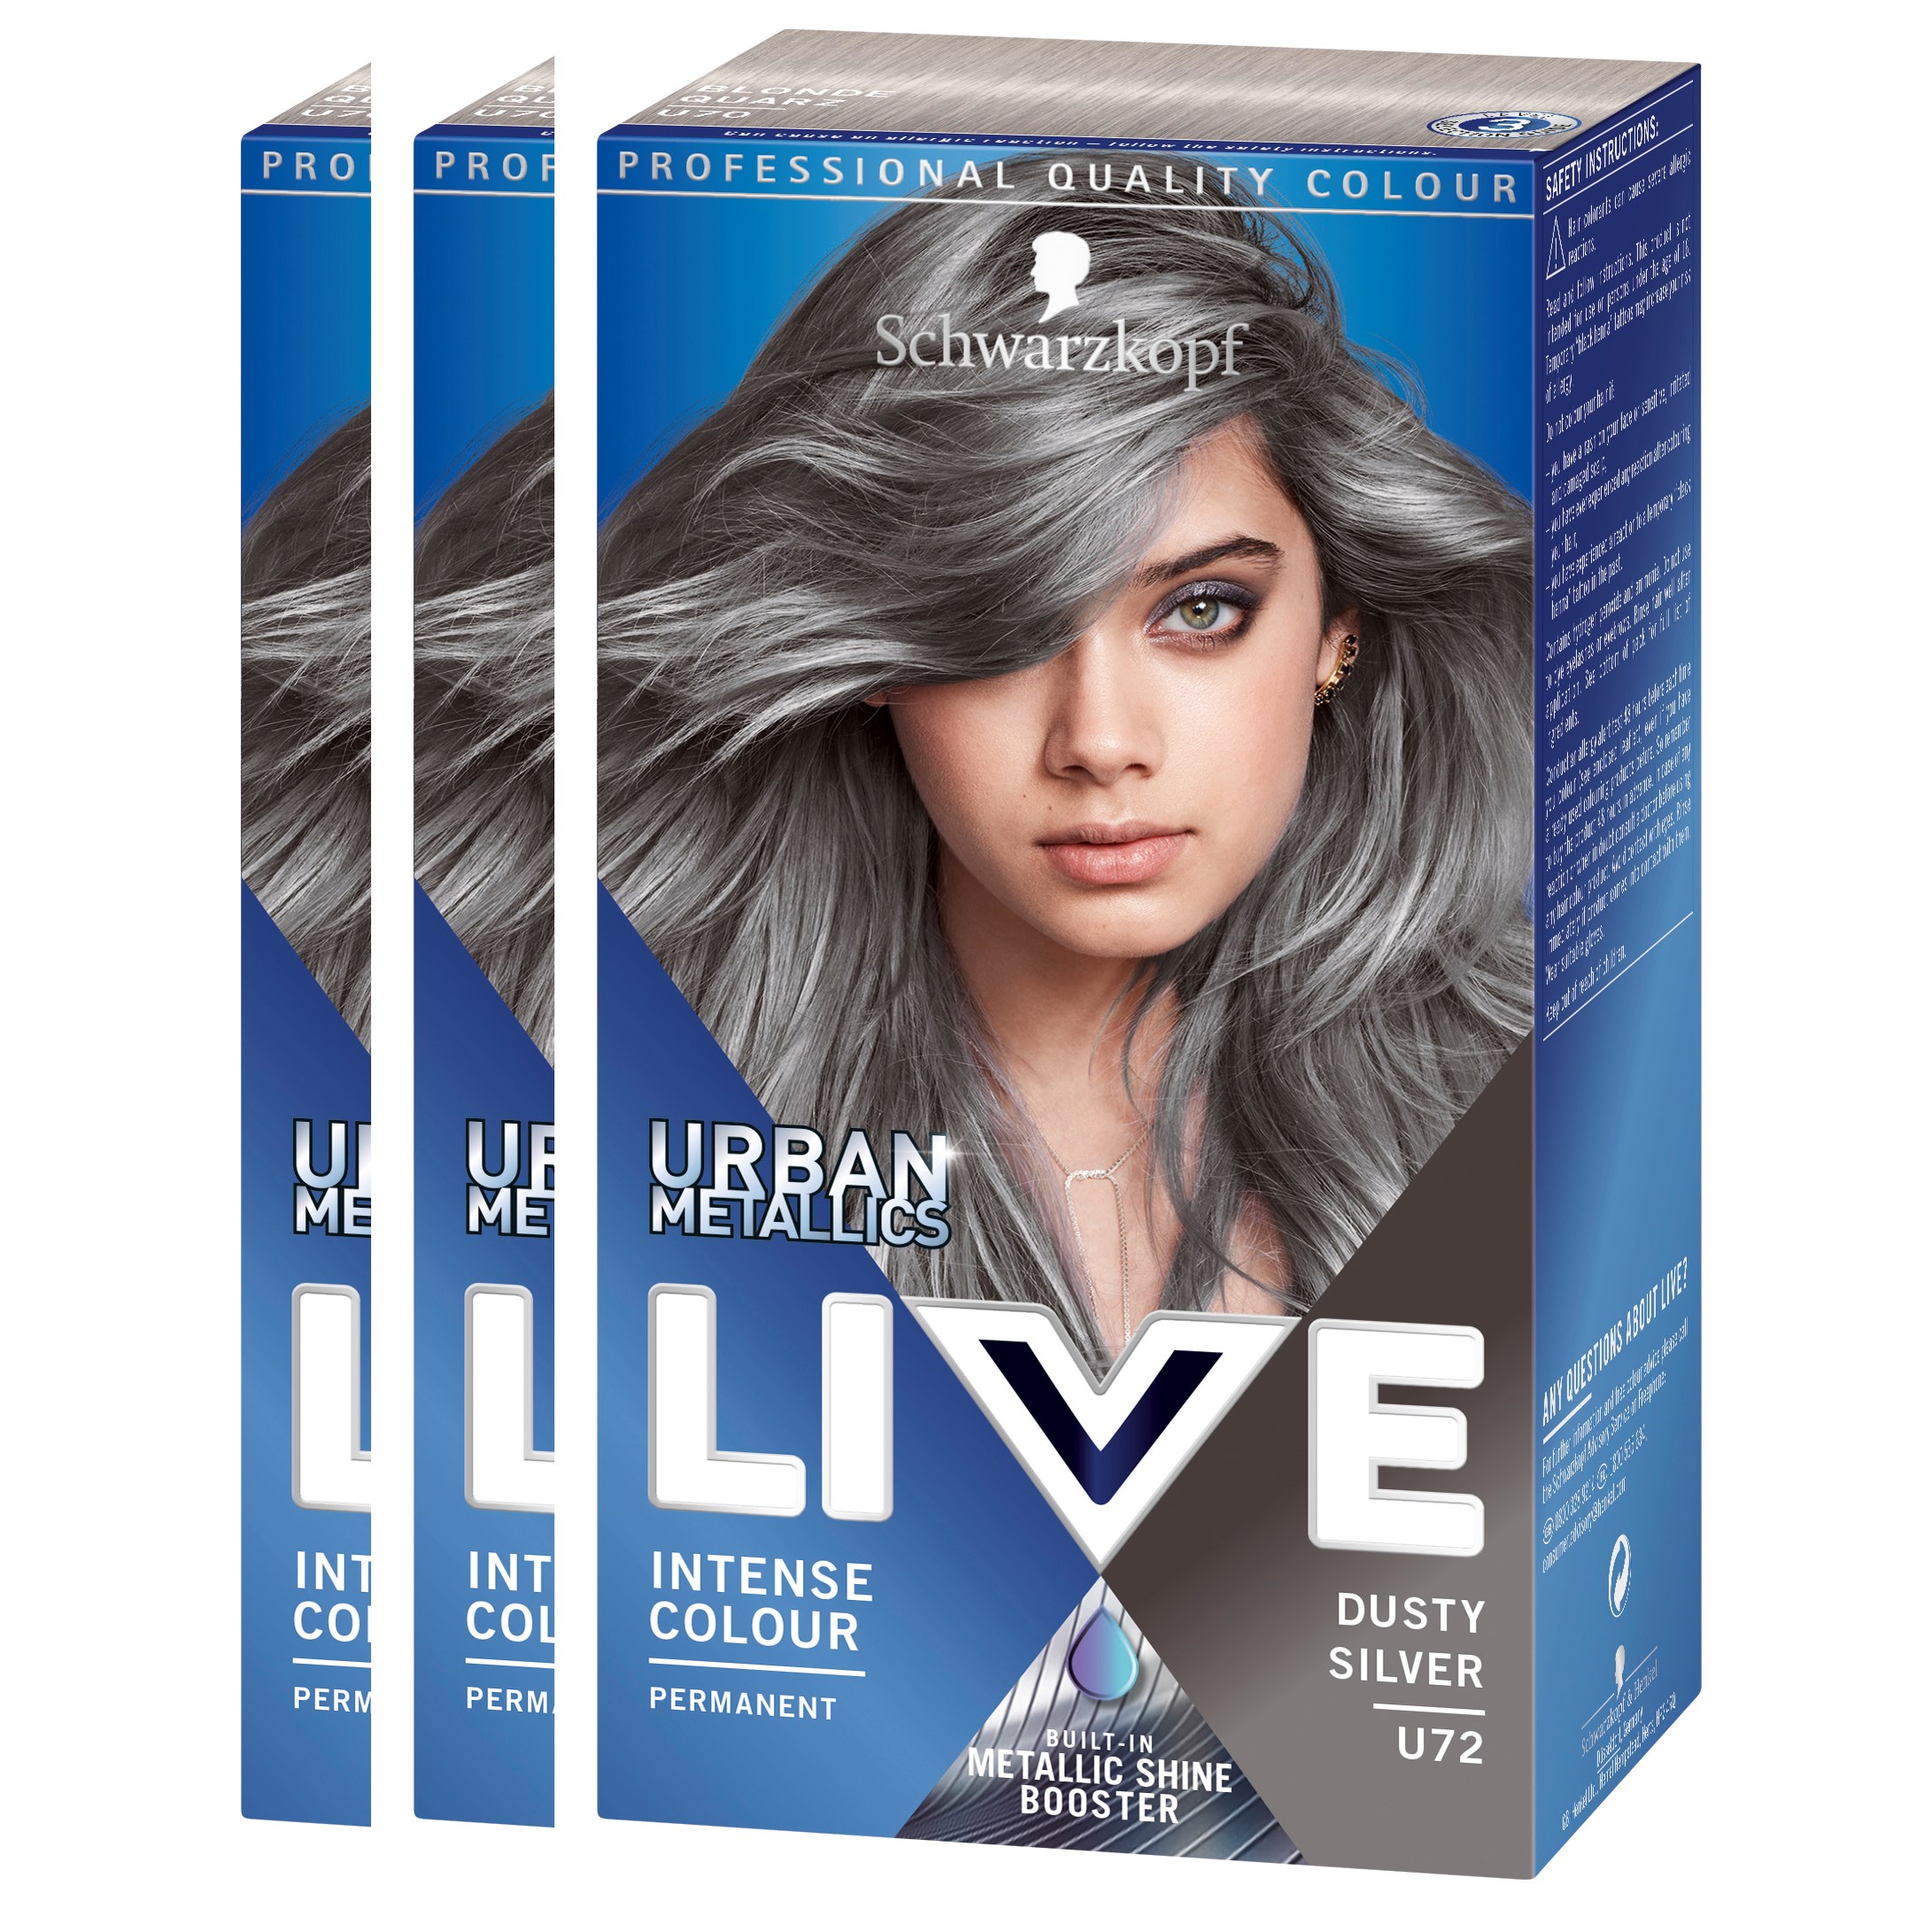 Läs mer om Schwarzkopf LIVE U72 Dusty Silver 3-pack